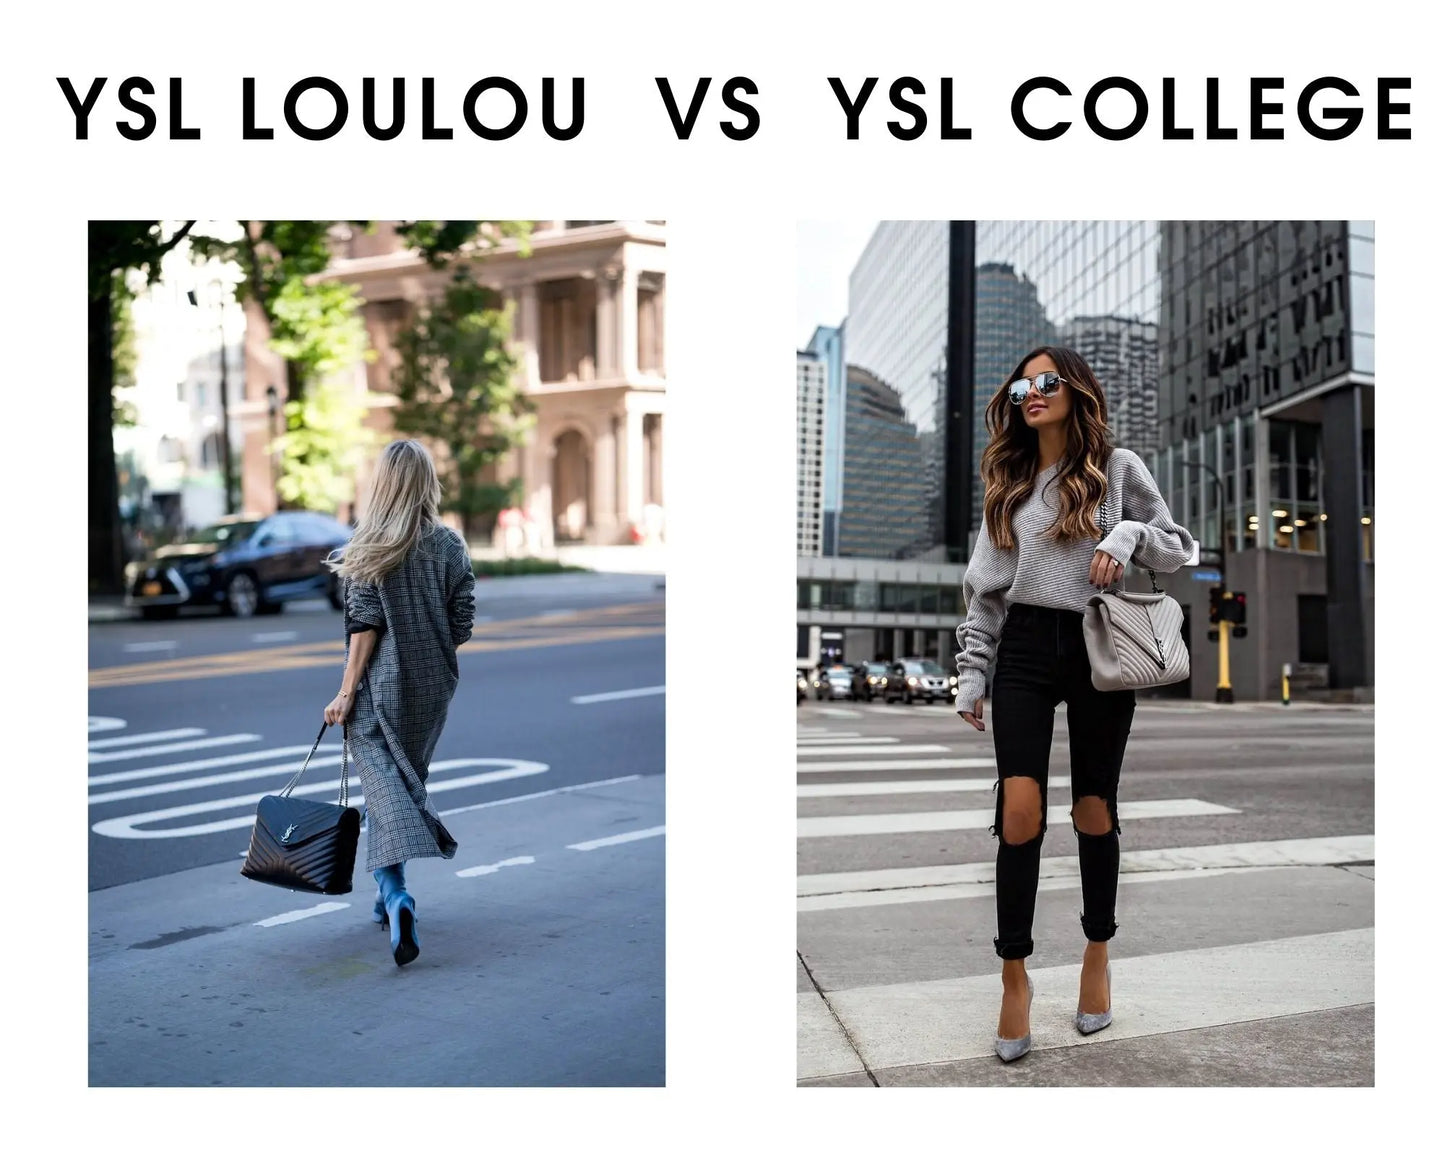 Luxury Designer Handbag LOULOU Y Shaped Seam Leather Ladies Metal